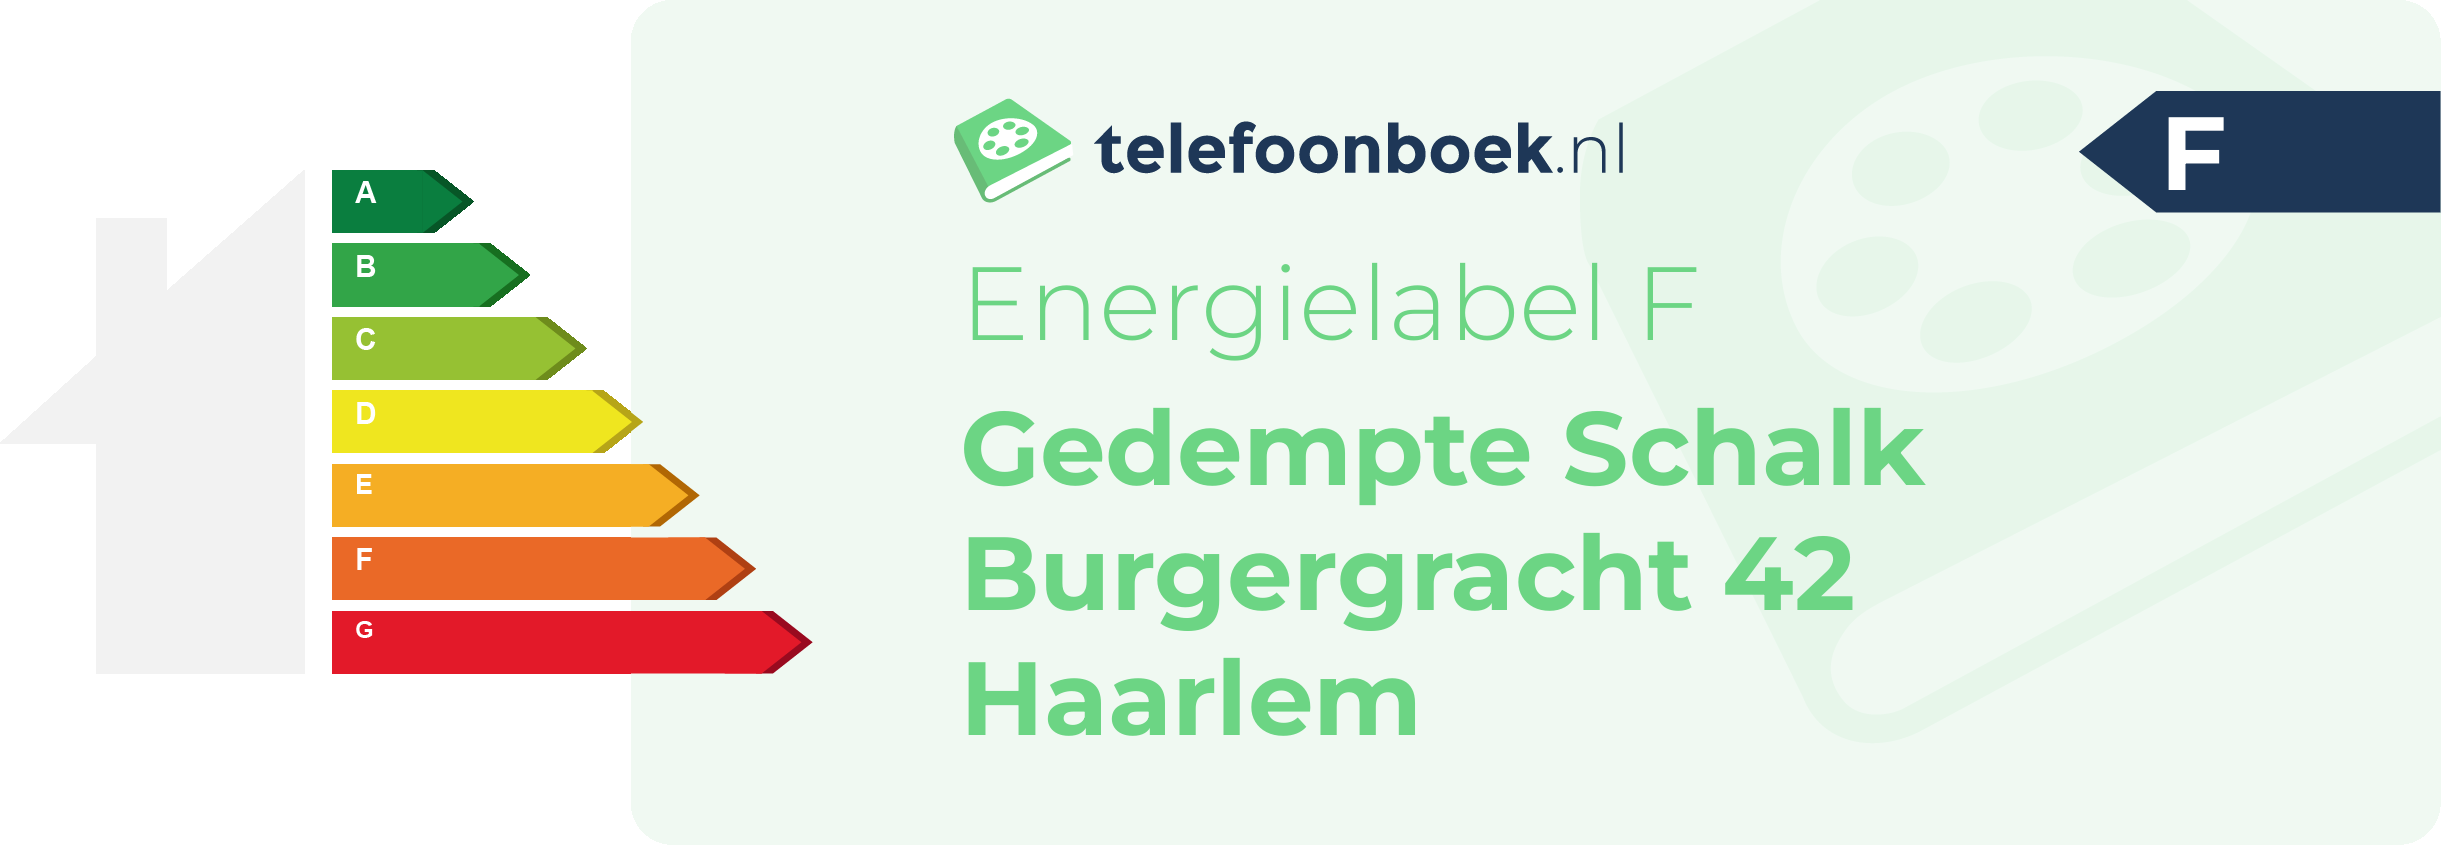 Energielabel Gedempte Schalk Burgergracht 42 Haarlem